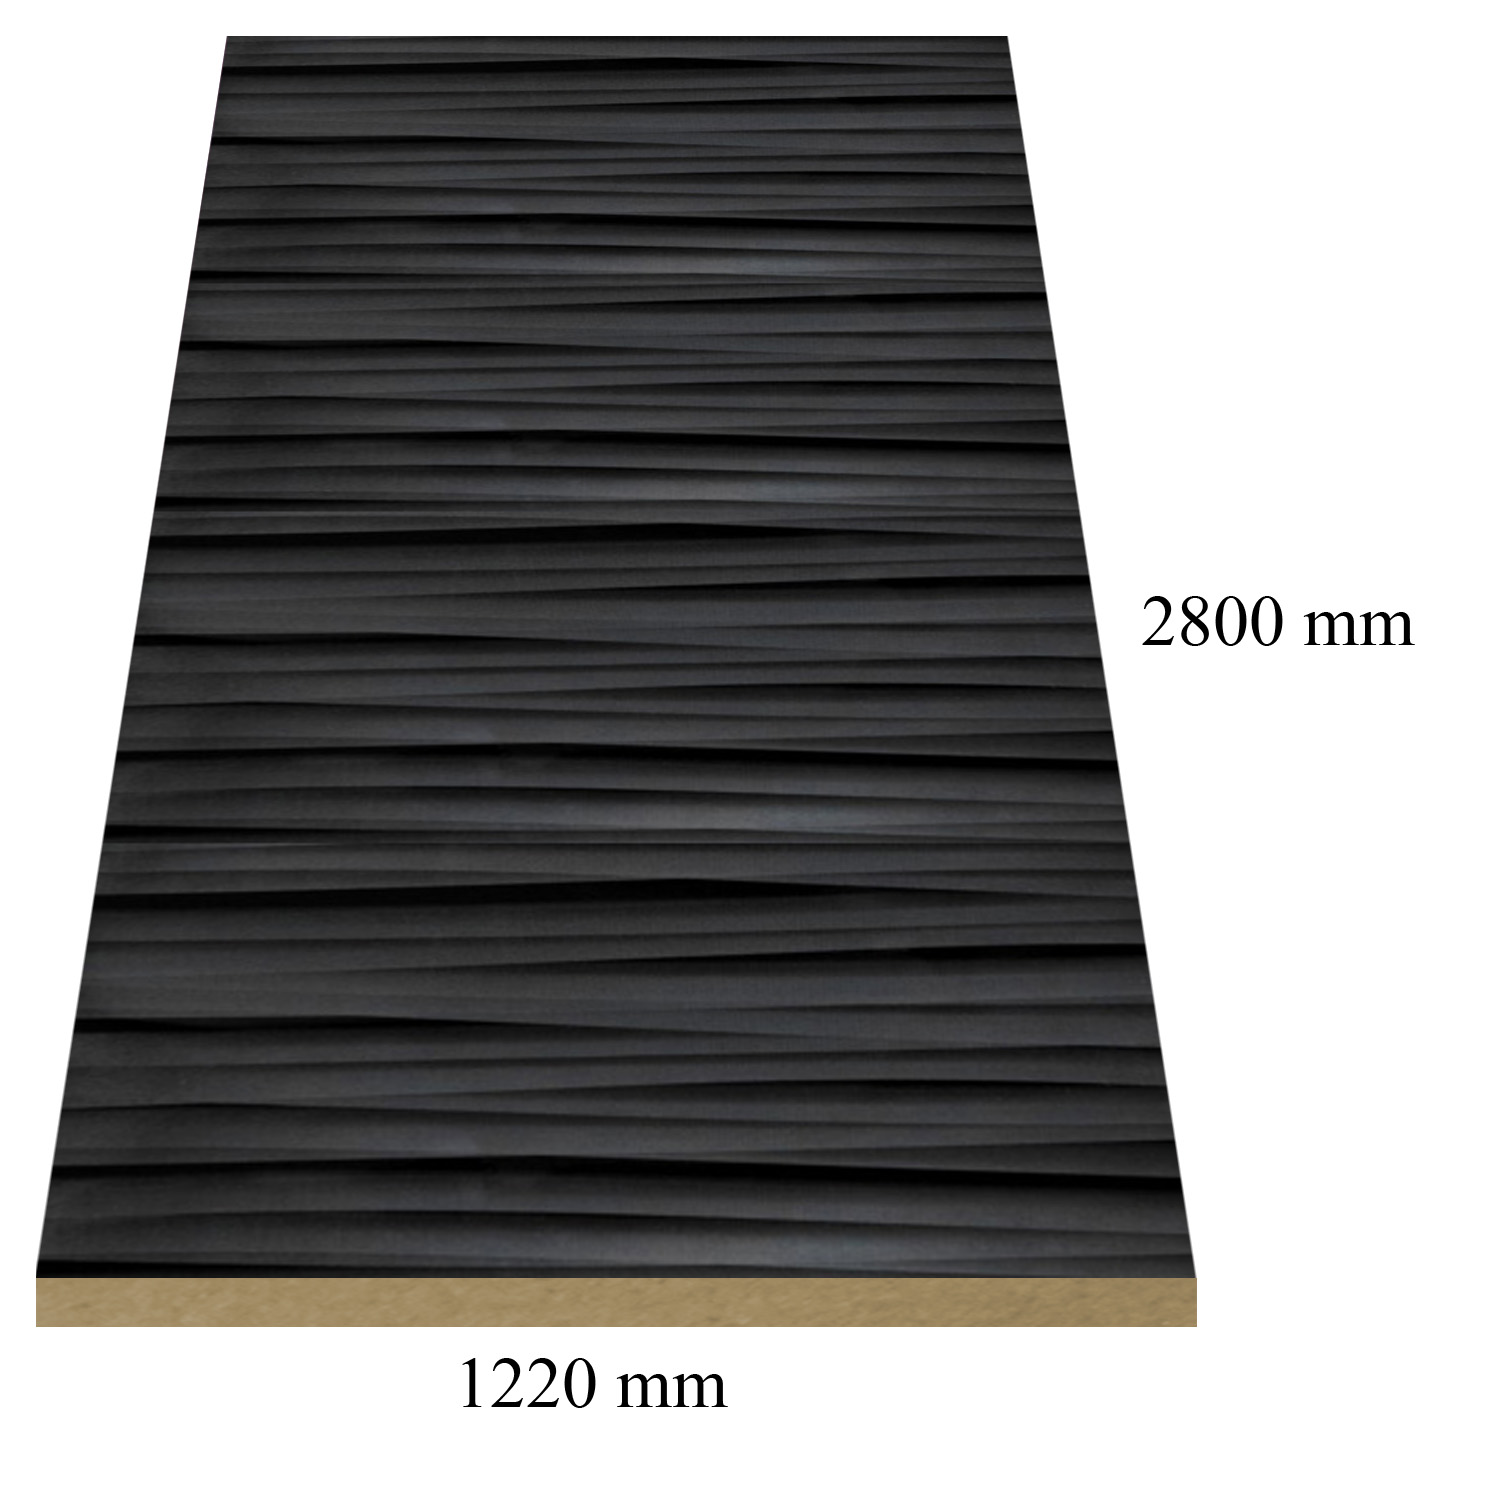 472 /6301 Sahara black high gloss - PVC coated 18 mm MDF